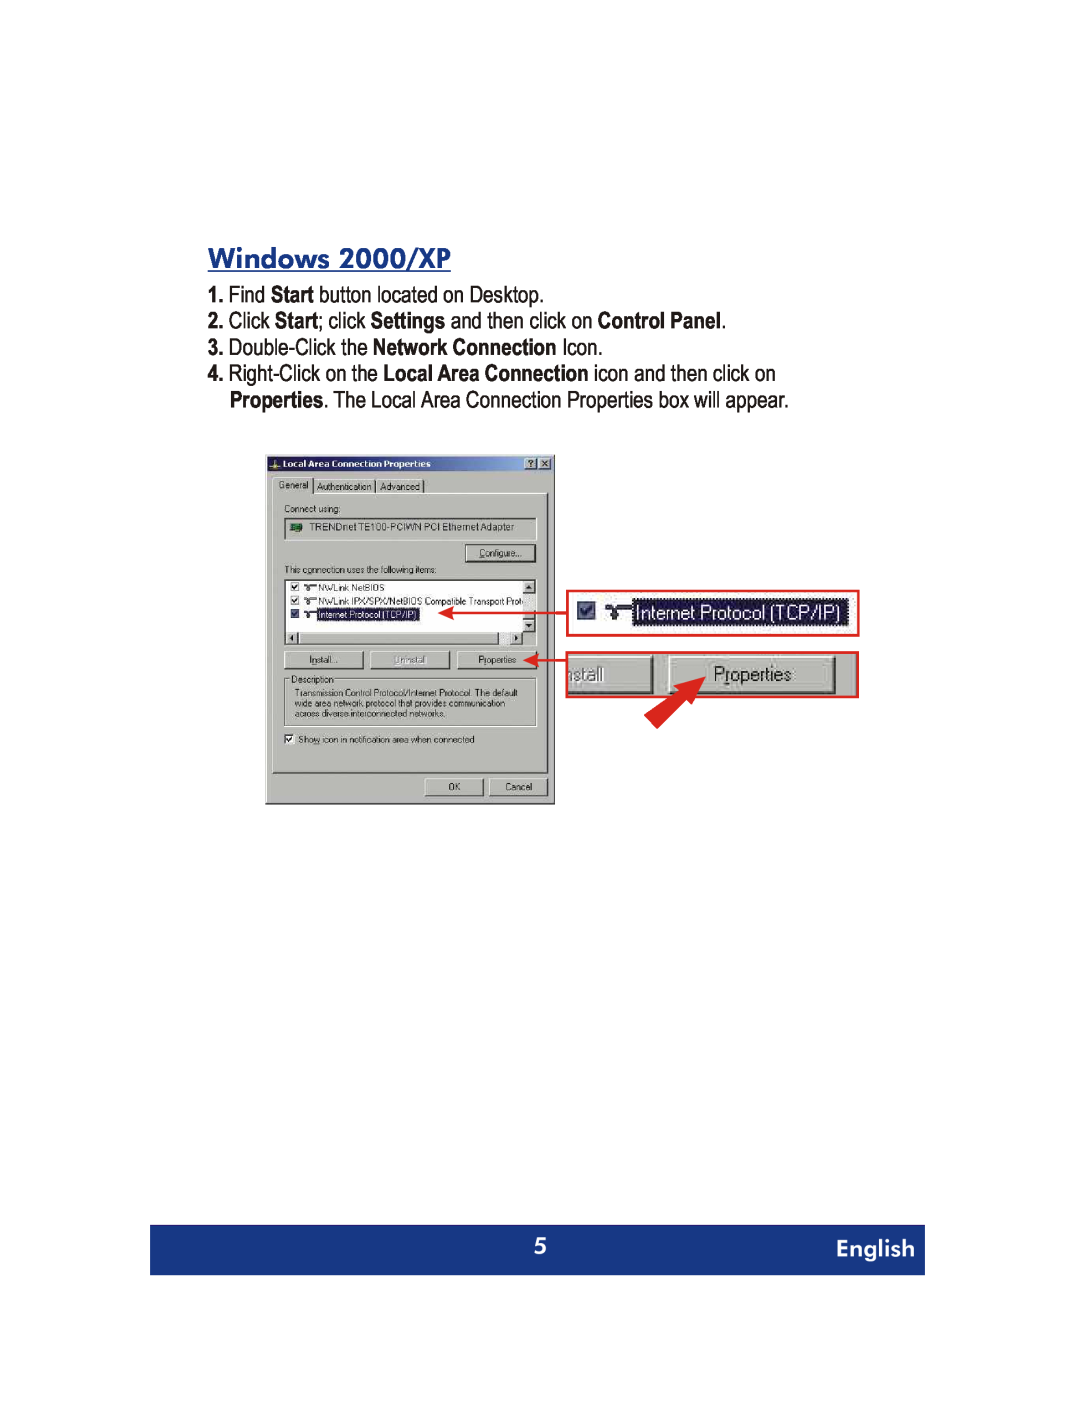 TRENDnet 54Mpbs 802.11g Wireless Access Point + Bridge Windows 2000/XP, Find Start button located on Desktop, English 